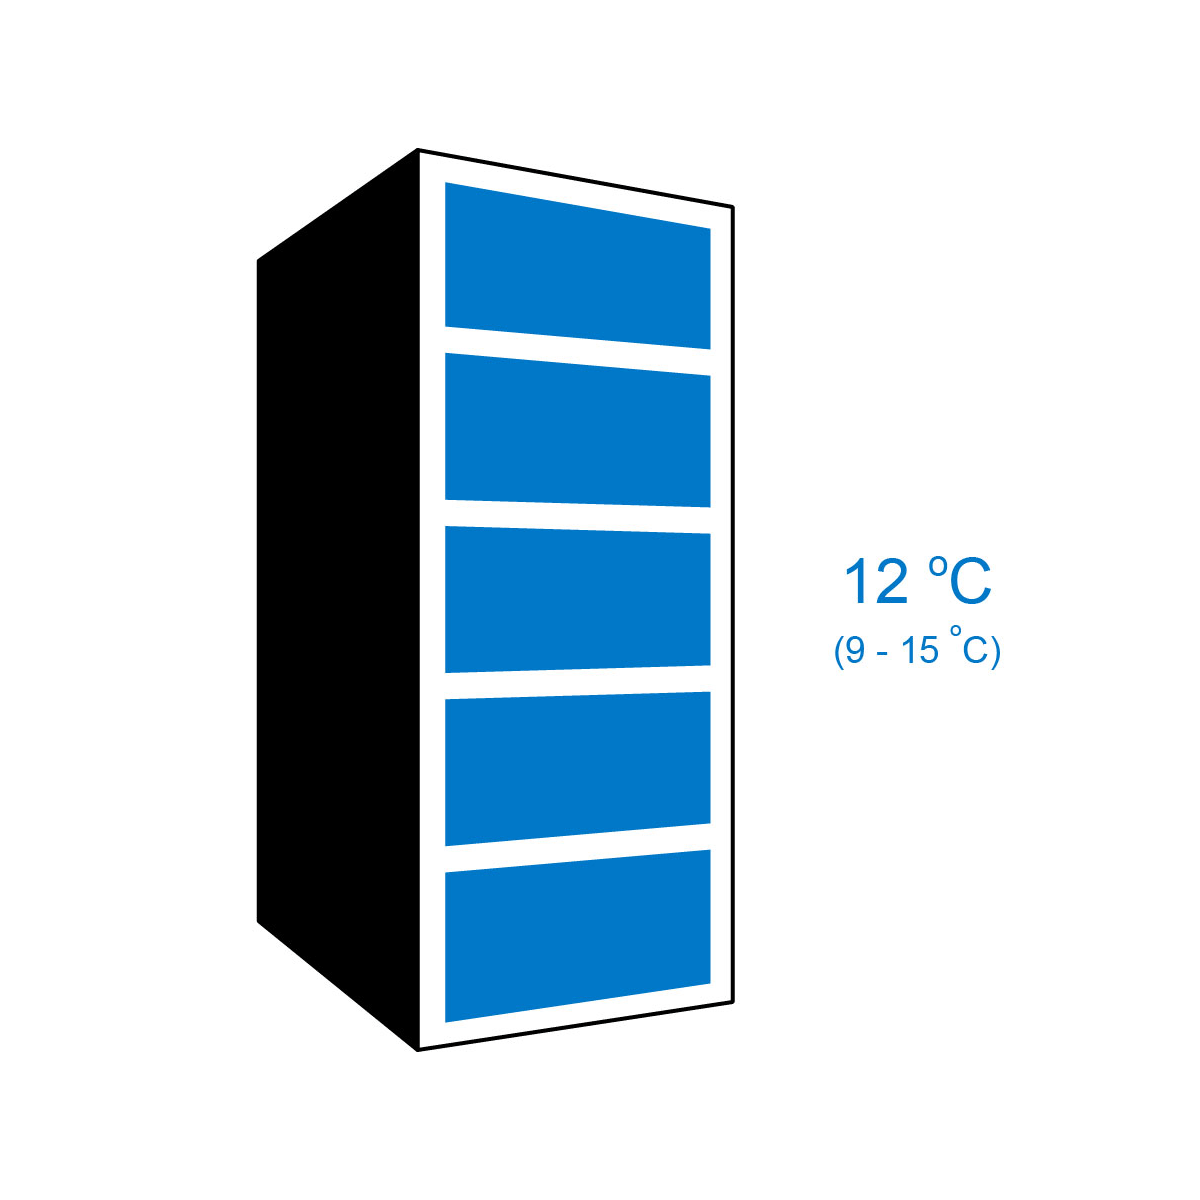 【Eurocave】V-PREM-M Maturing 1 temperature wine cabinet Première, Medium model